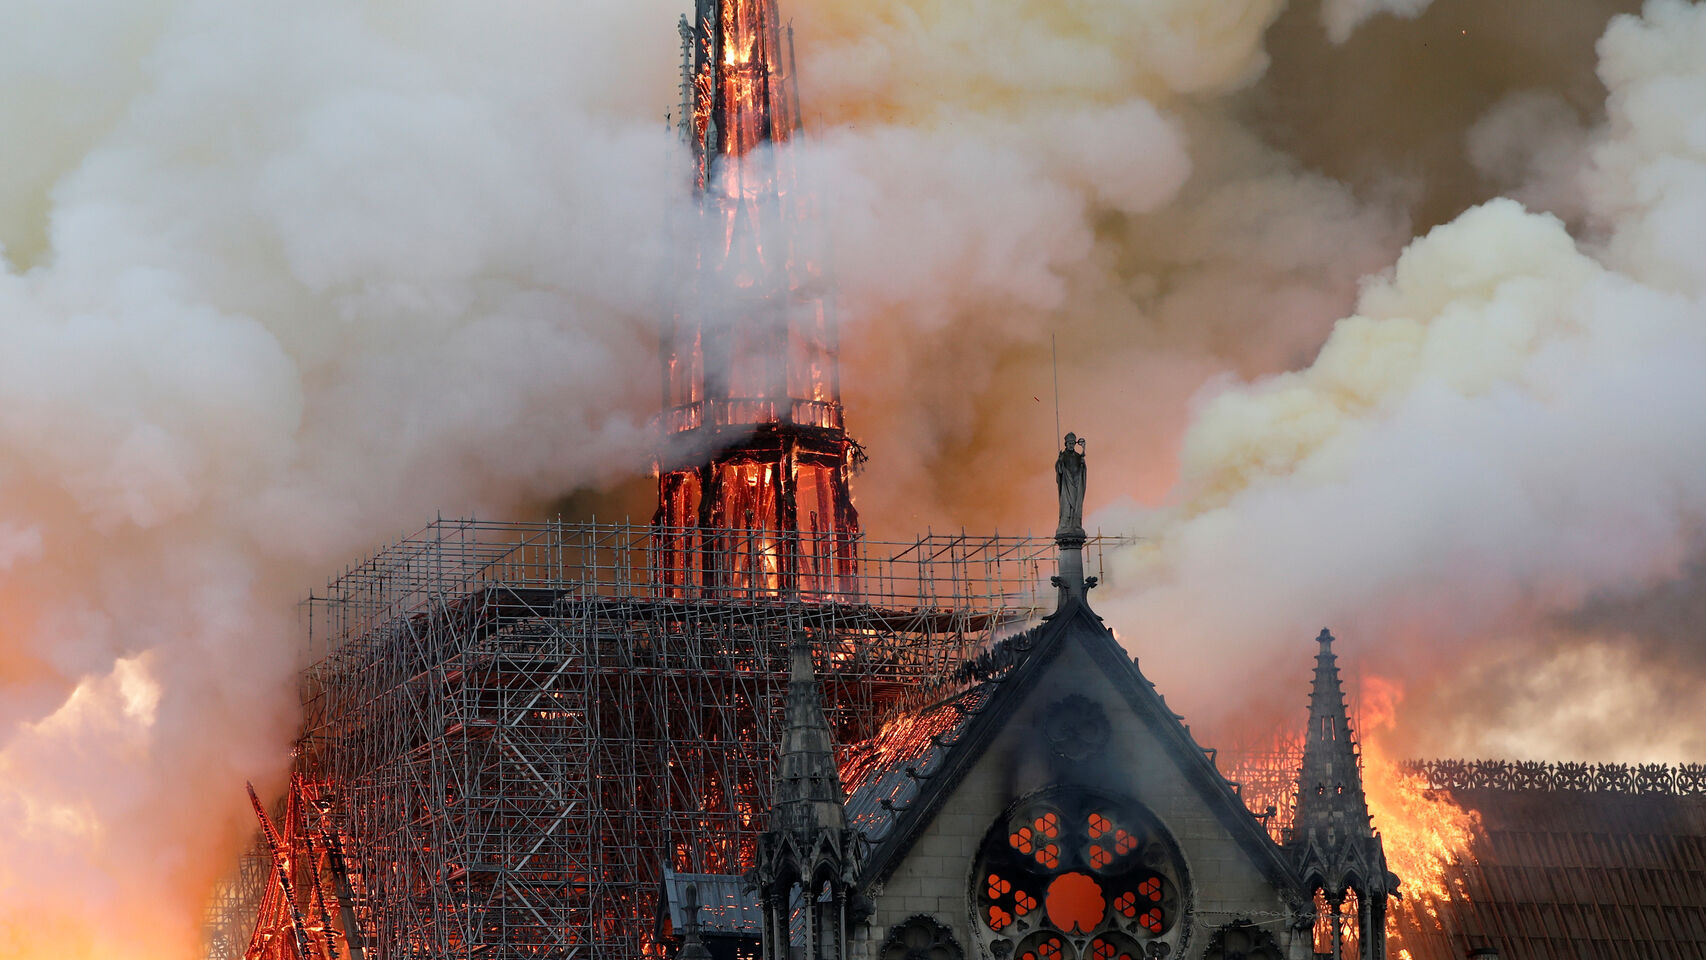 Espectacular imagen del incendio en Notre Dame.